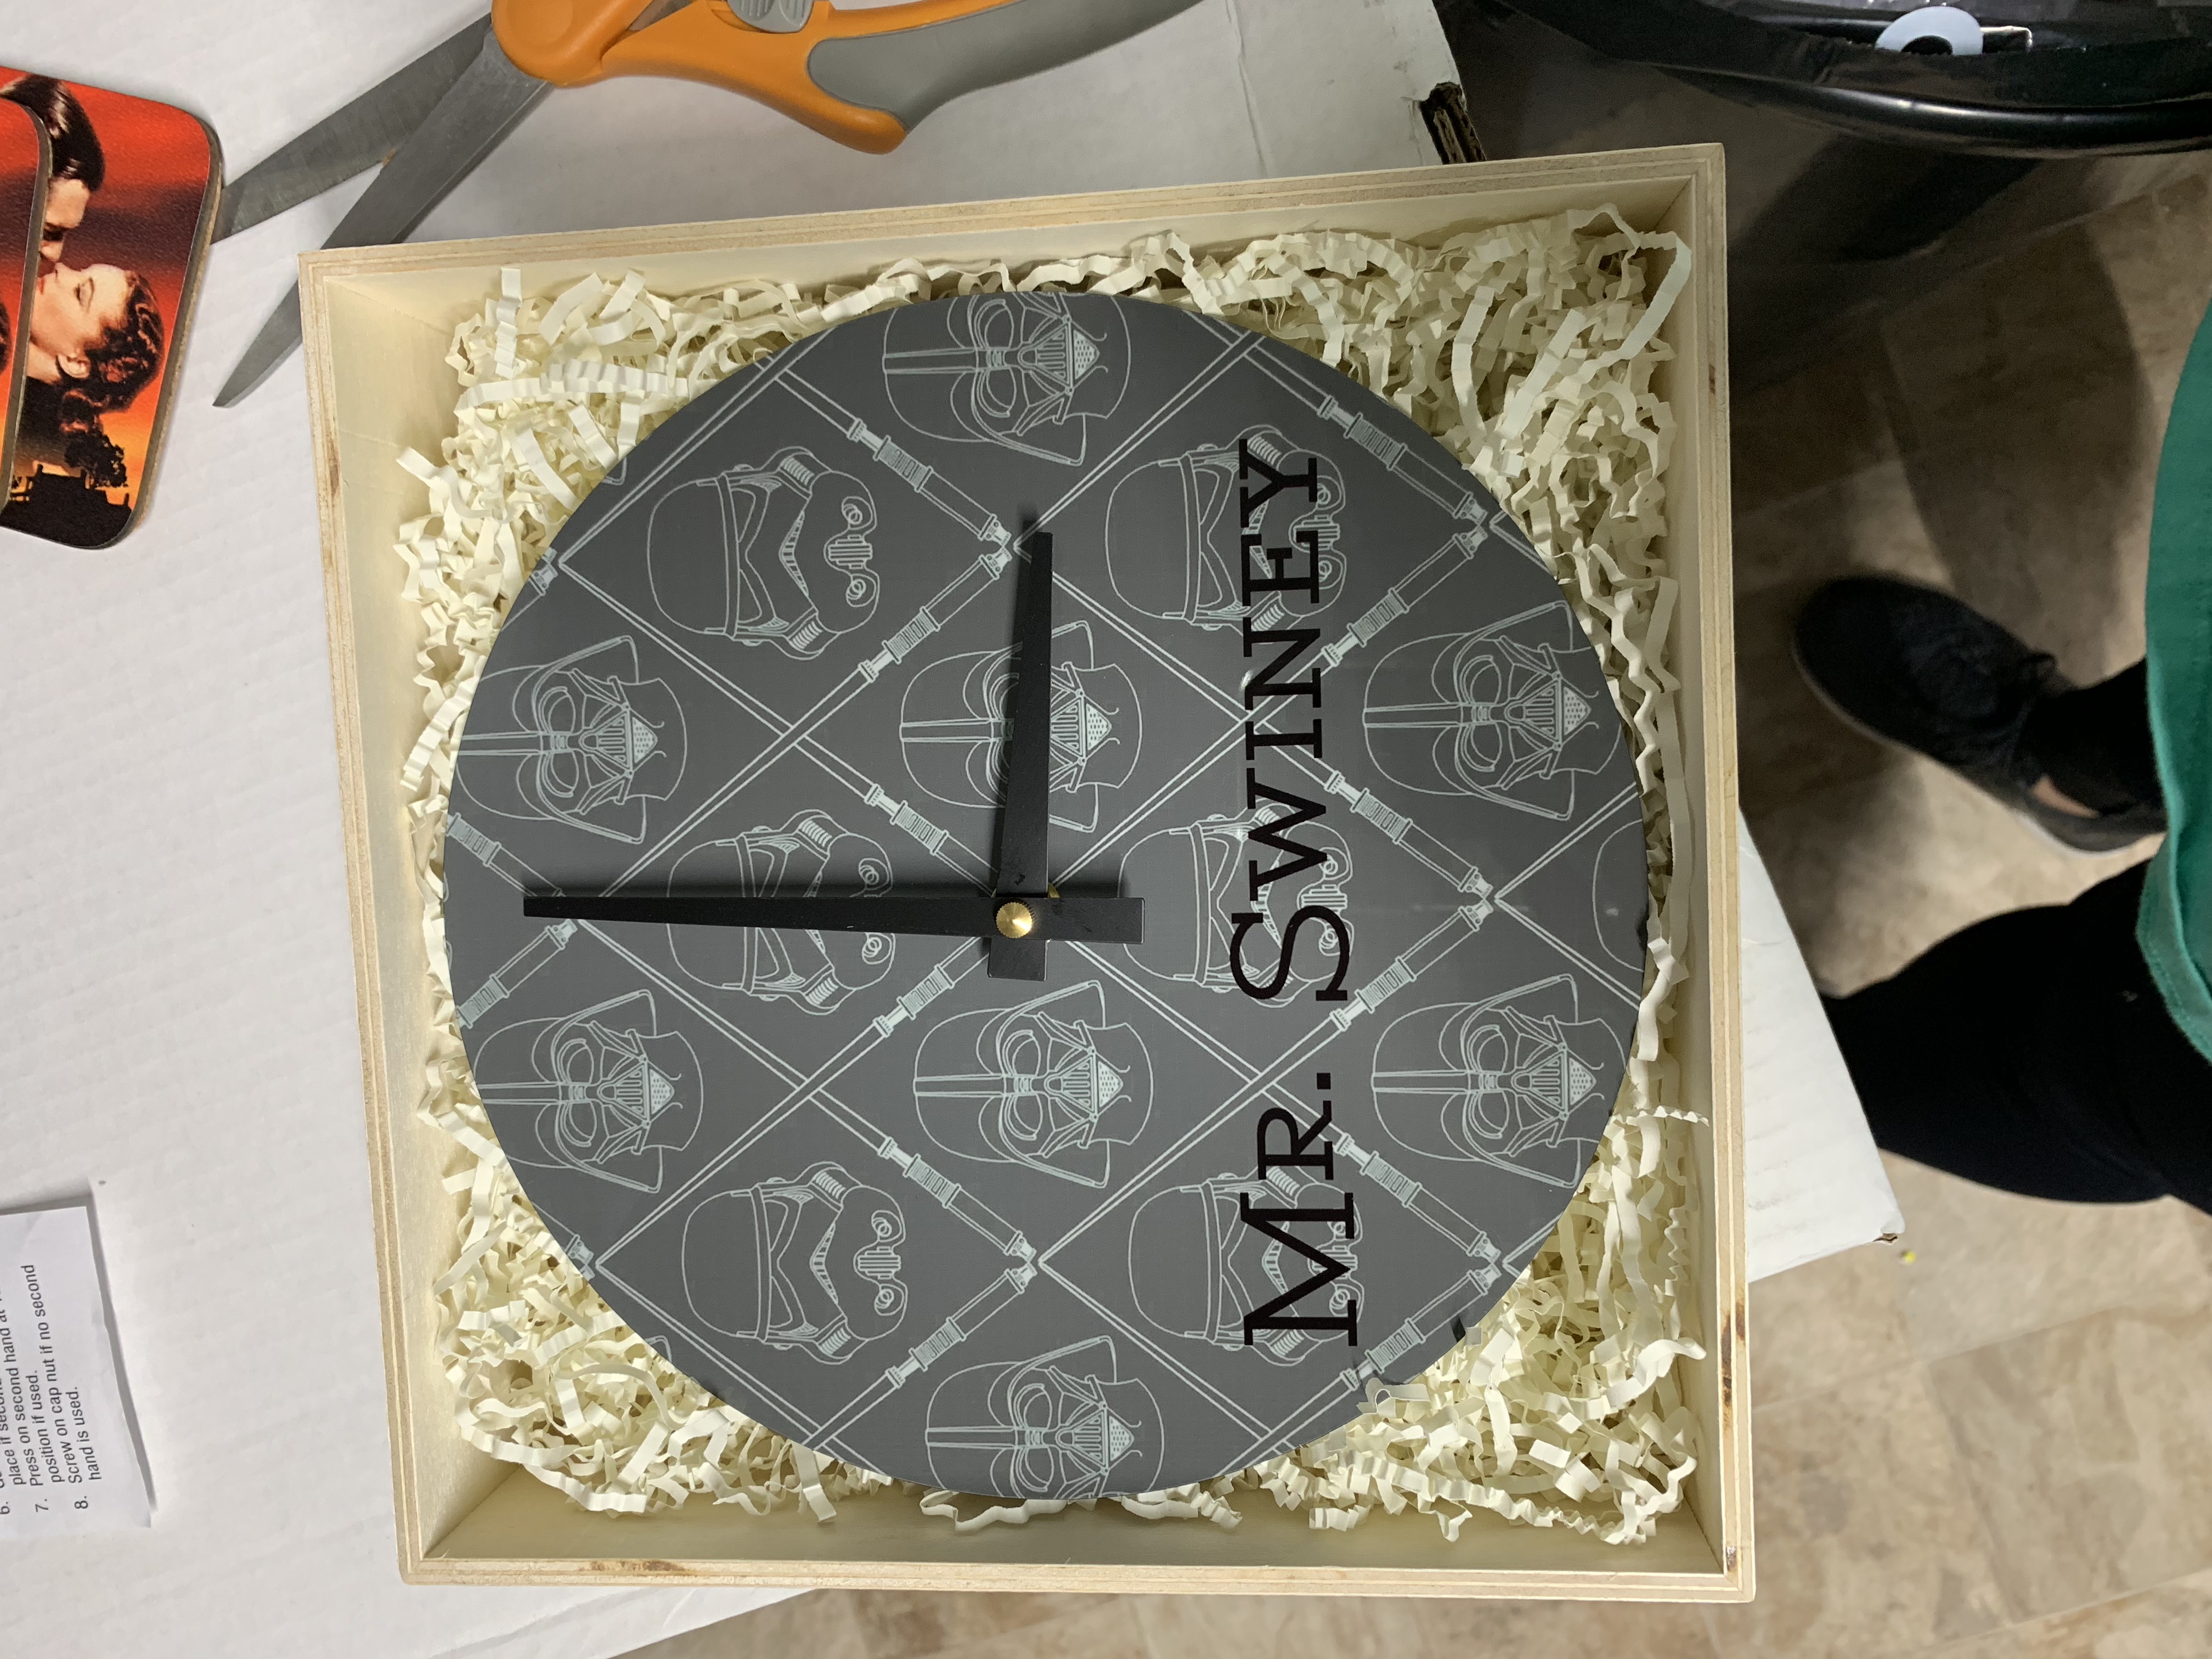 Principal Clock made with sublimation printing